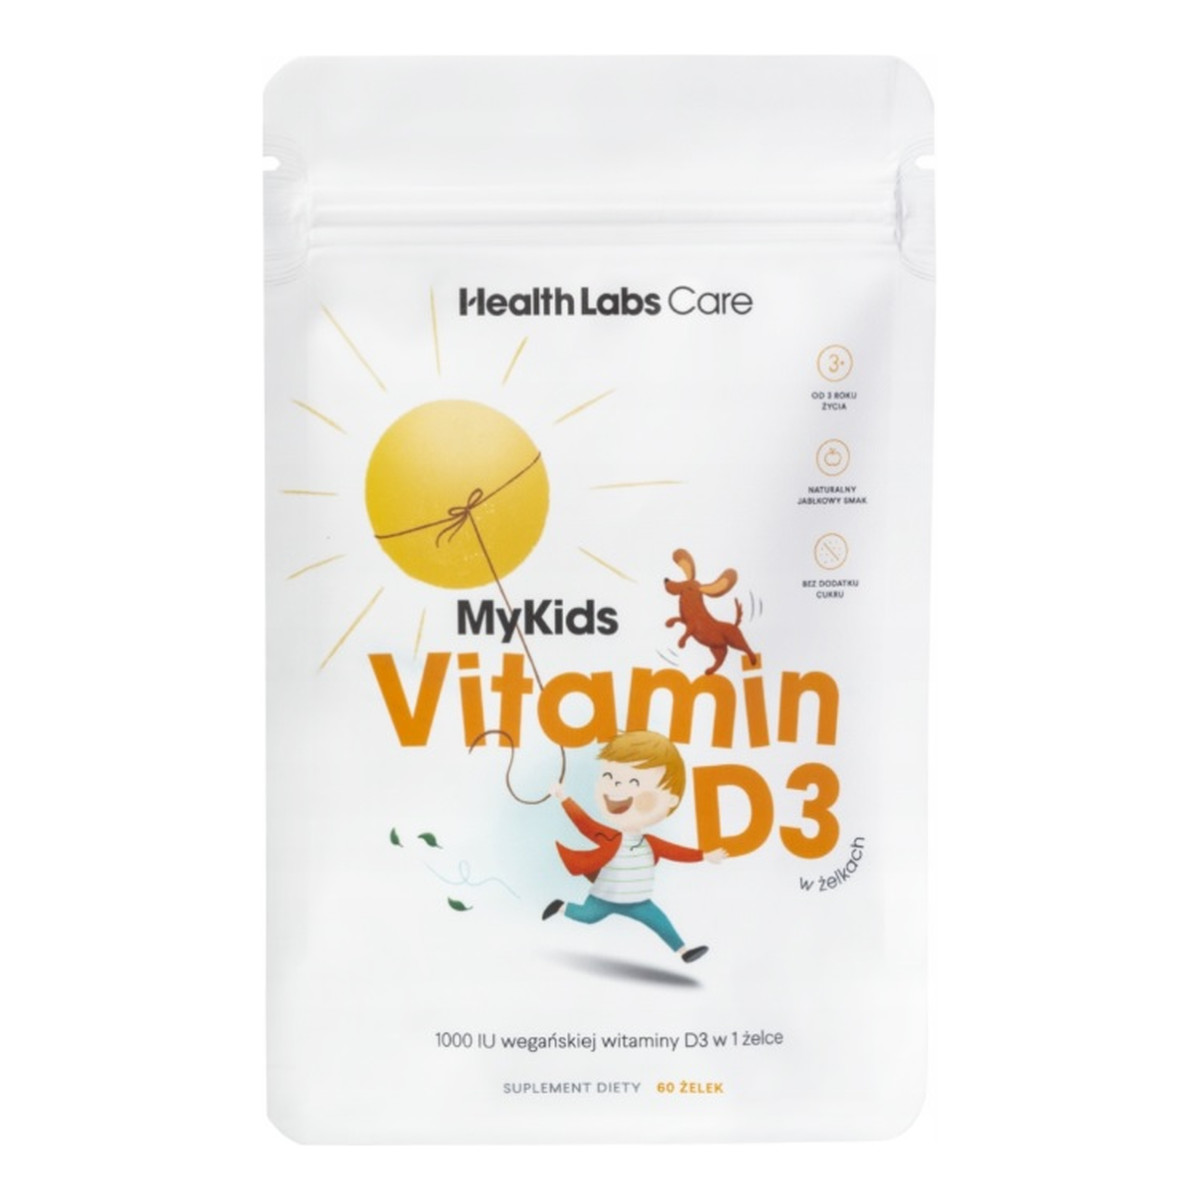 HealthLabs MyKids Vitamin D3 wegańska witamina D w Żelkach dla dzieci suplement diety 60 żelek